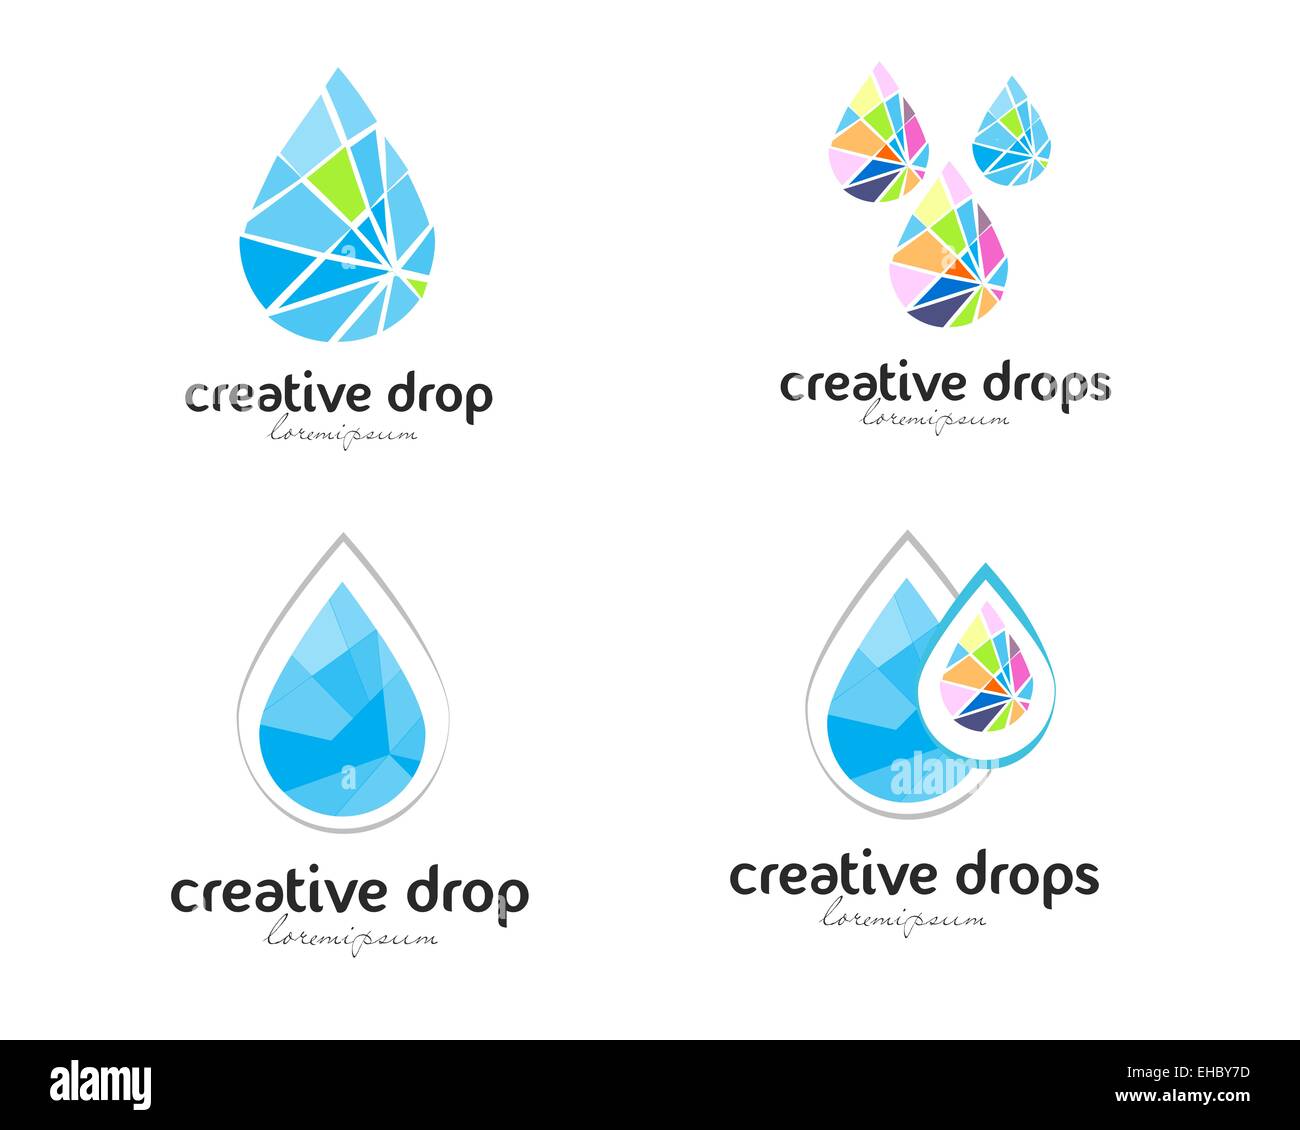 Water drop logo vector. Creative abstract logos made of water drops Stock Photo